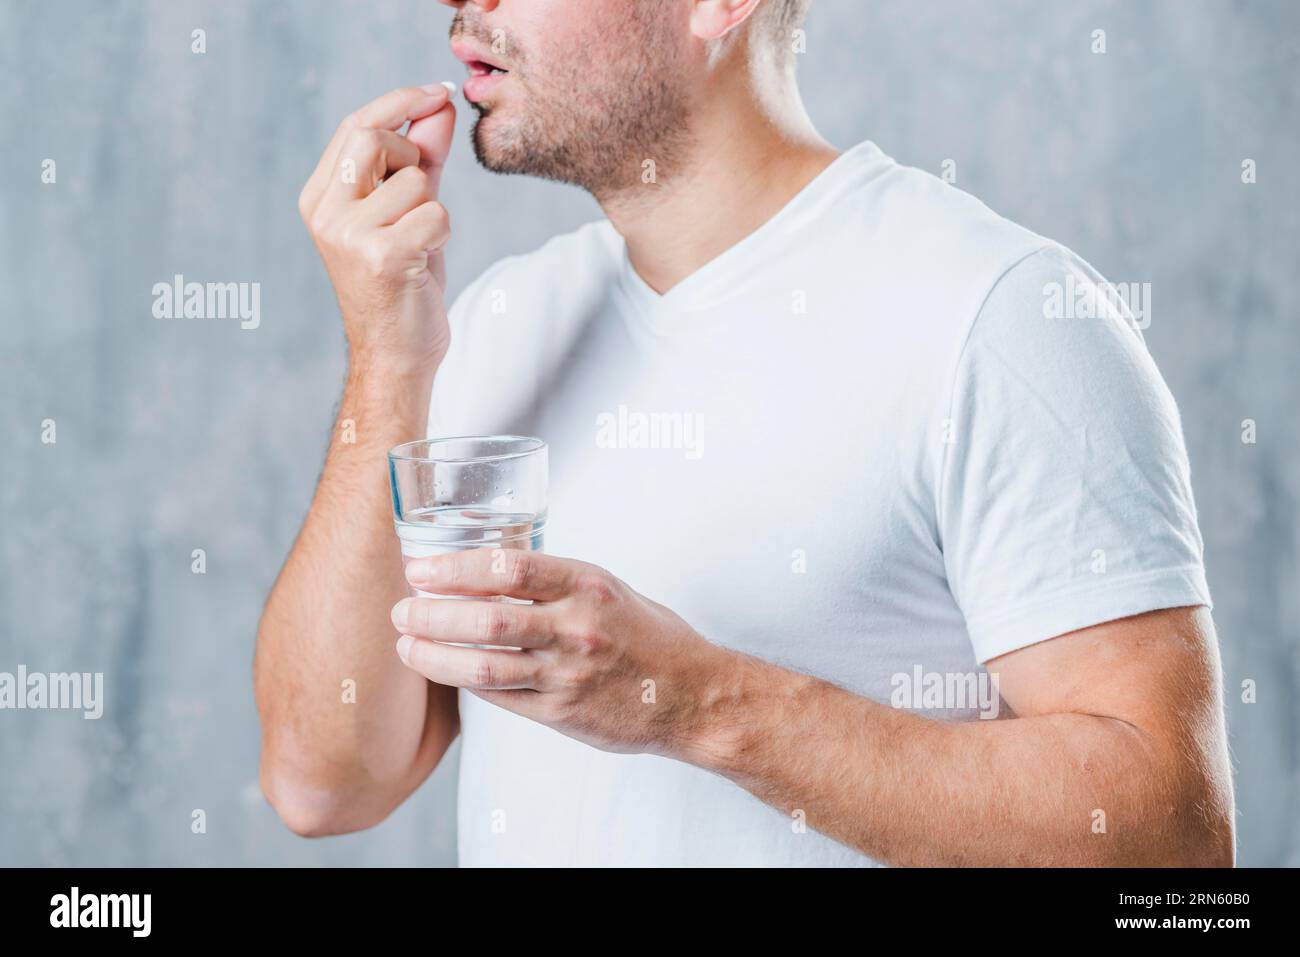 https://c8.alamy.com/comp/2RN60B0/young-man-holding-glass-water-taking-medicine-2RN60B0.jpg